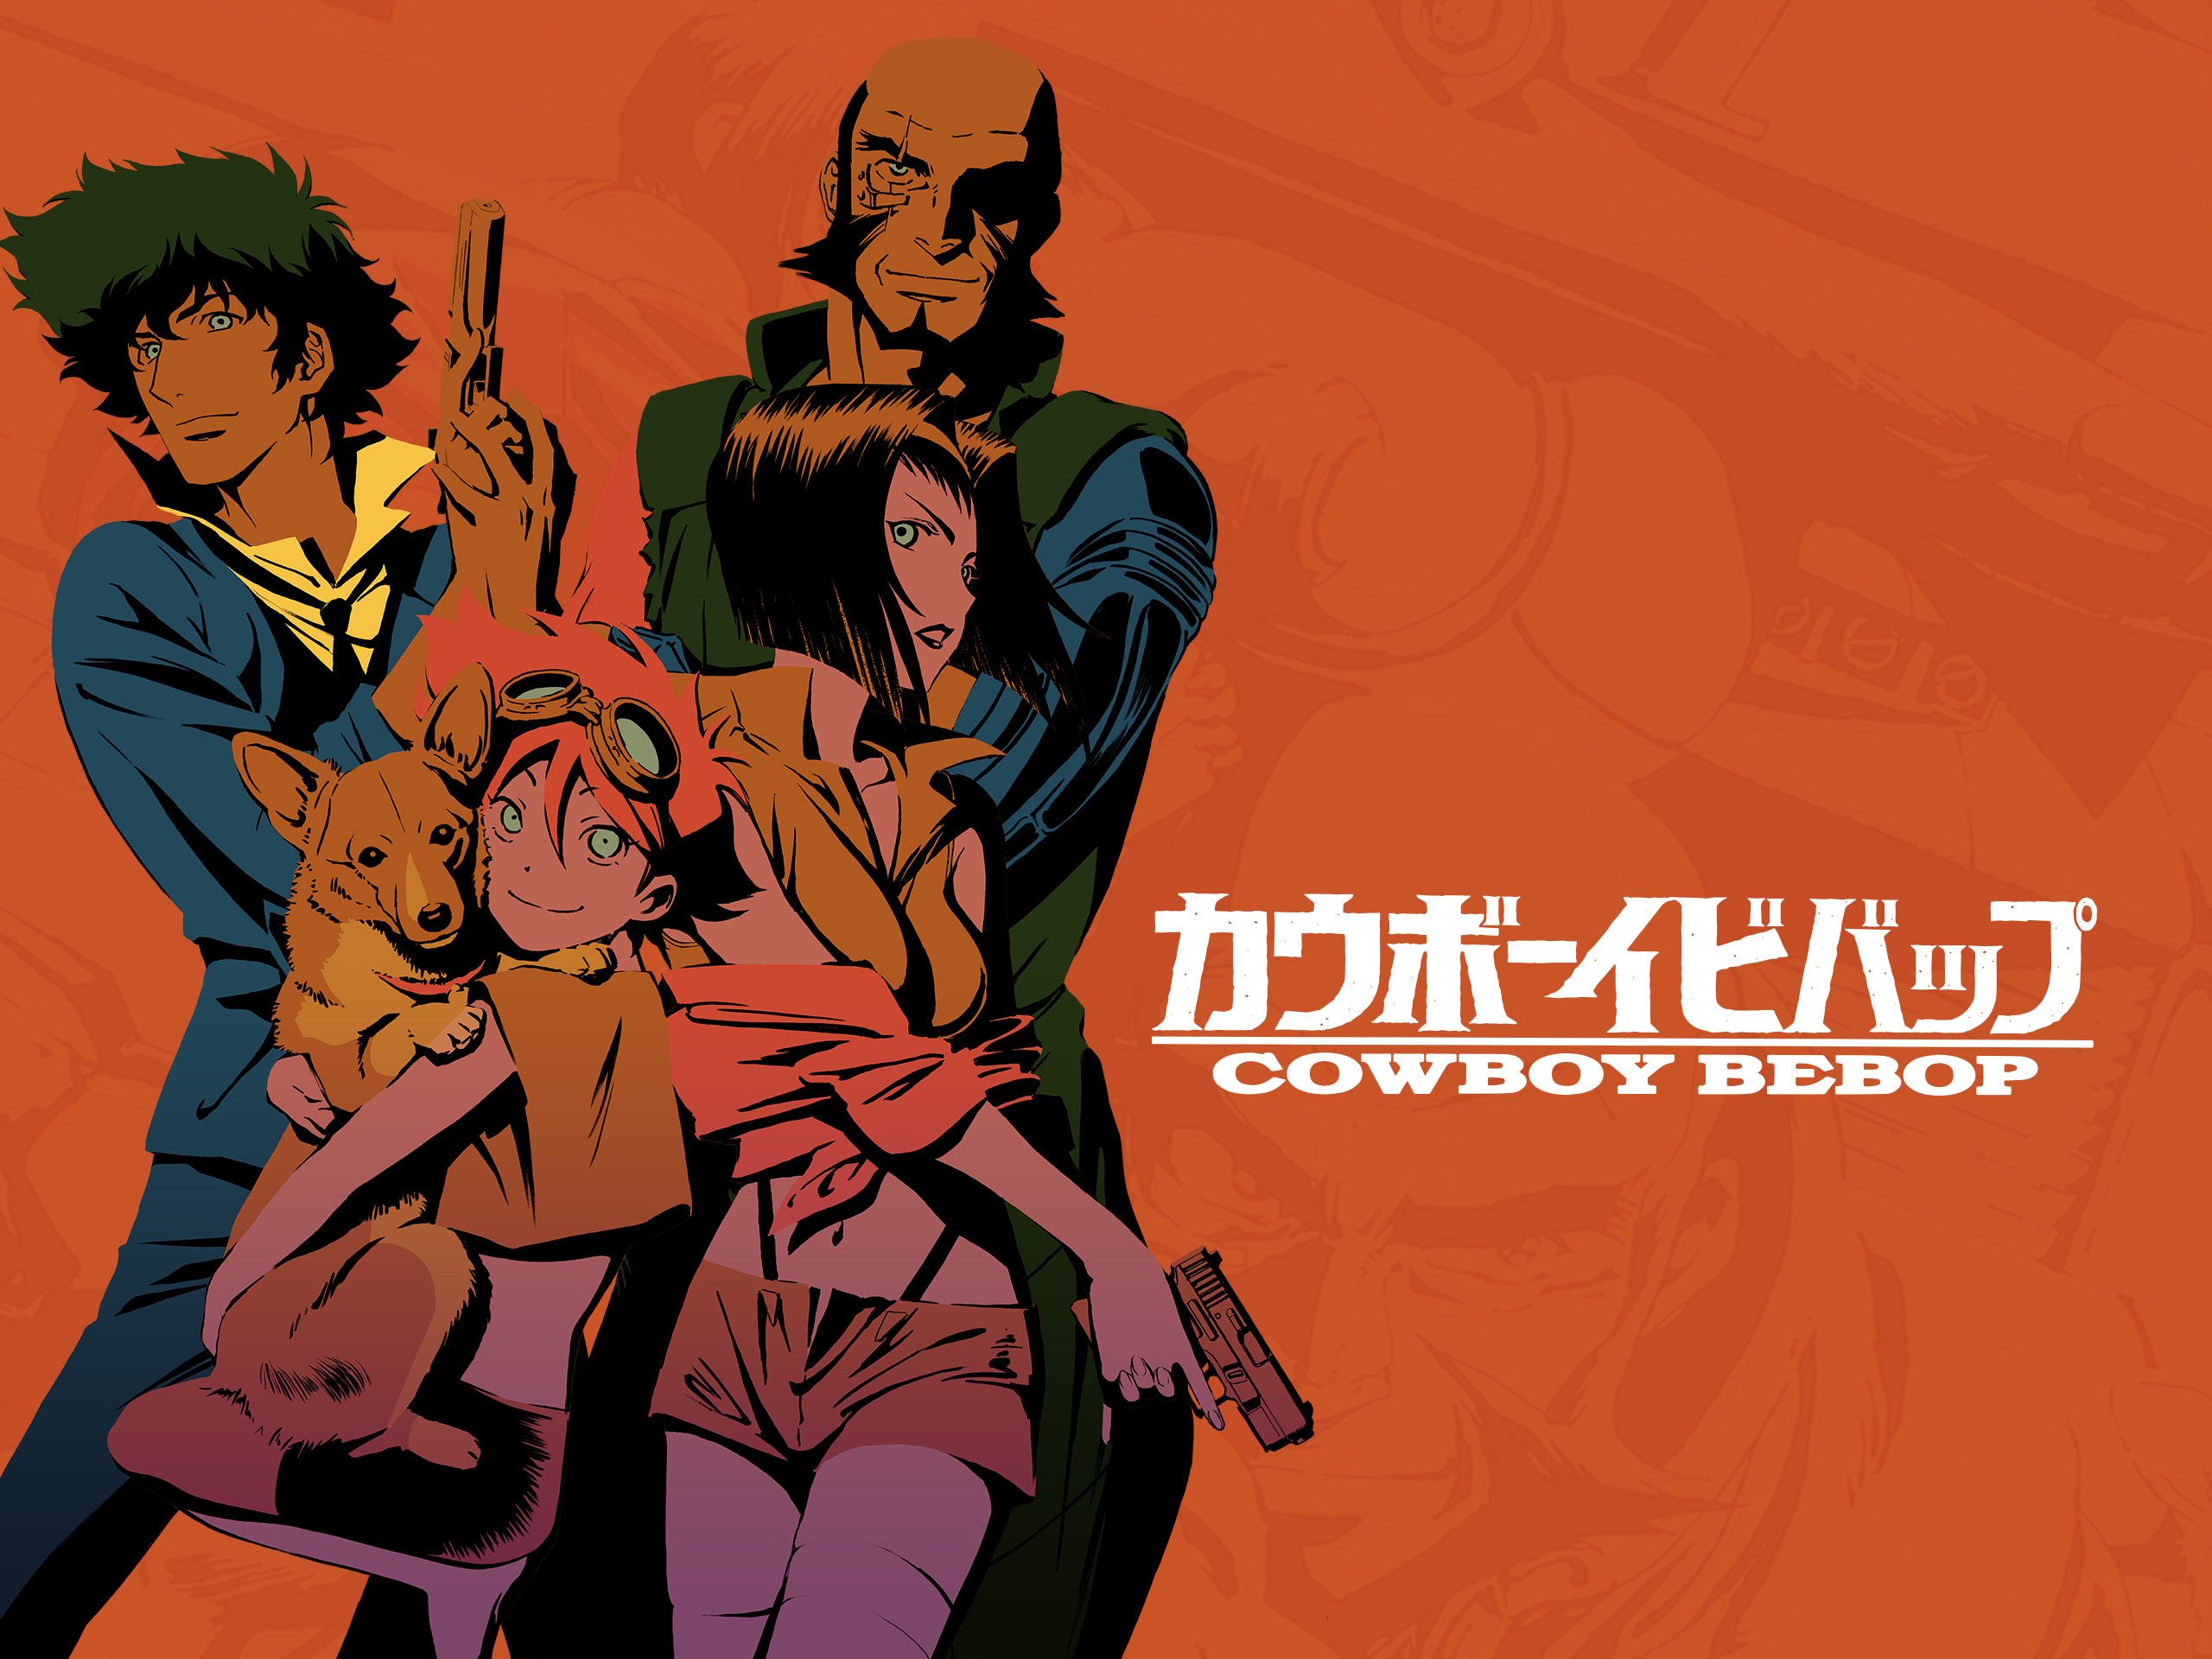 Cowboy Bebop Anime | Recap and Analysis - Culture of Gaming